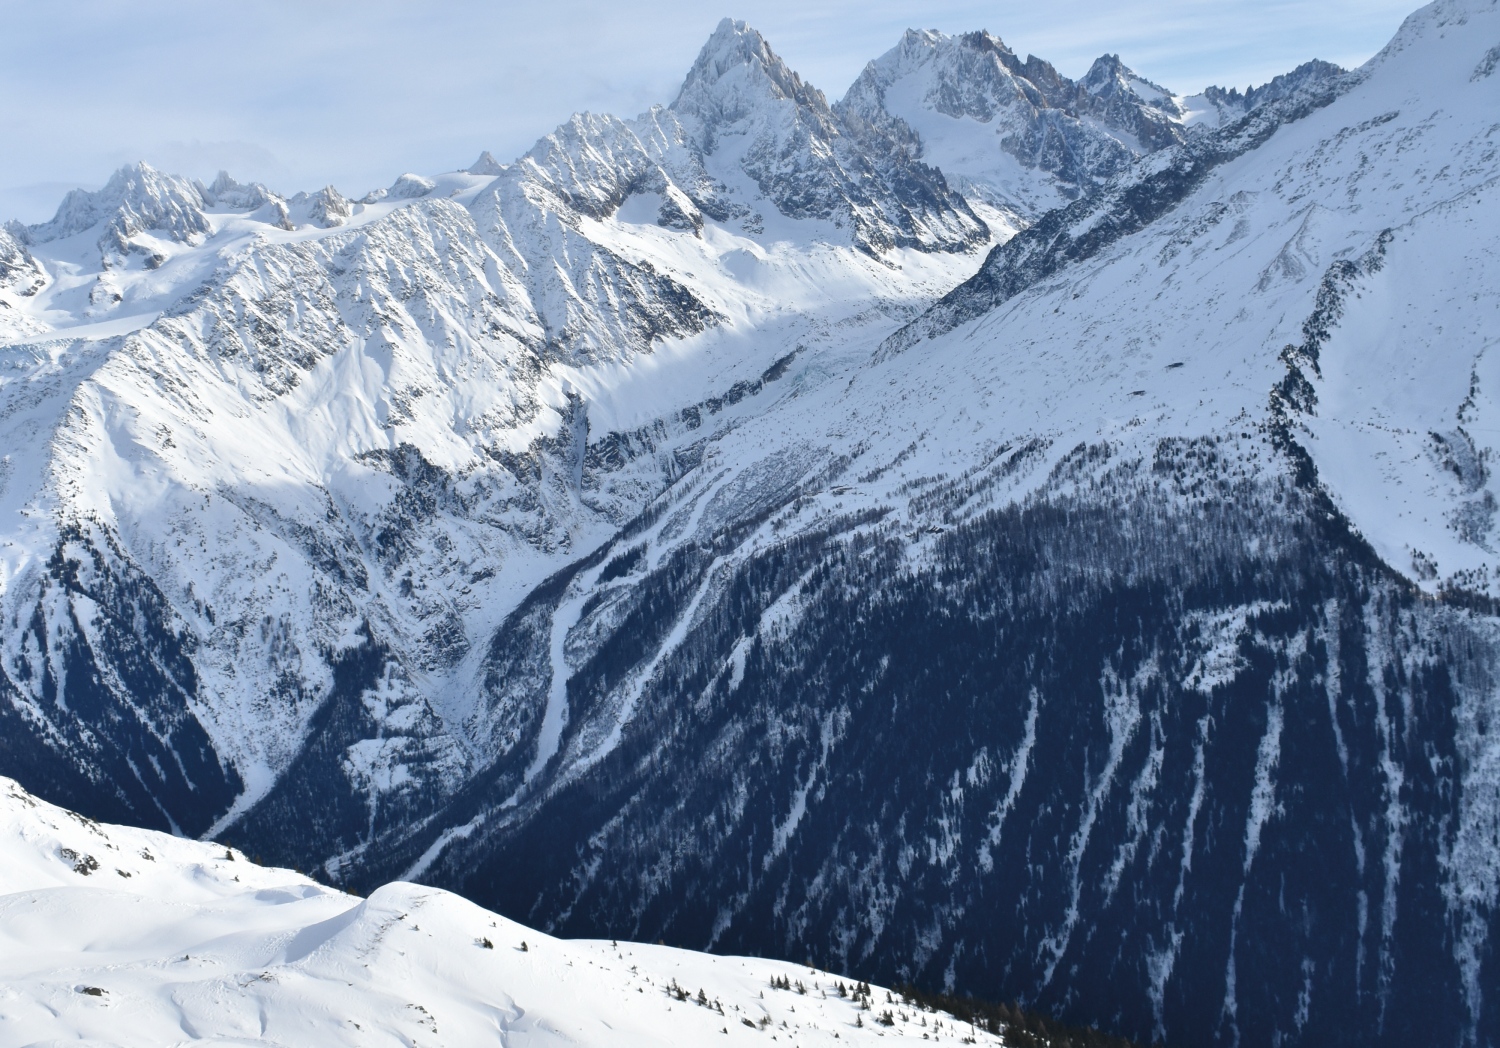 Incredible_mountain_scenenry_Chamonix_France_CREDIT_Mike_Walker.jpg